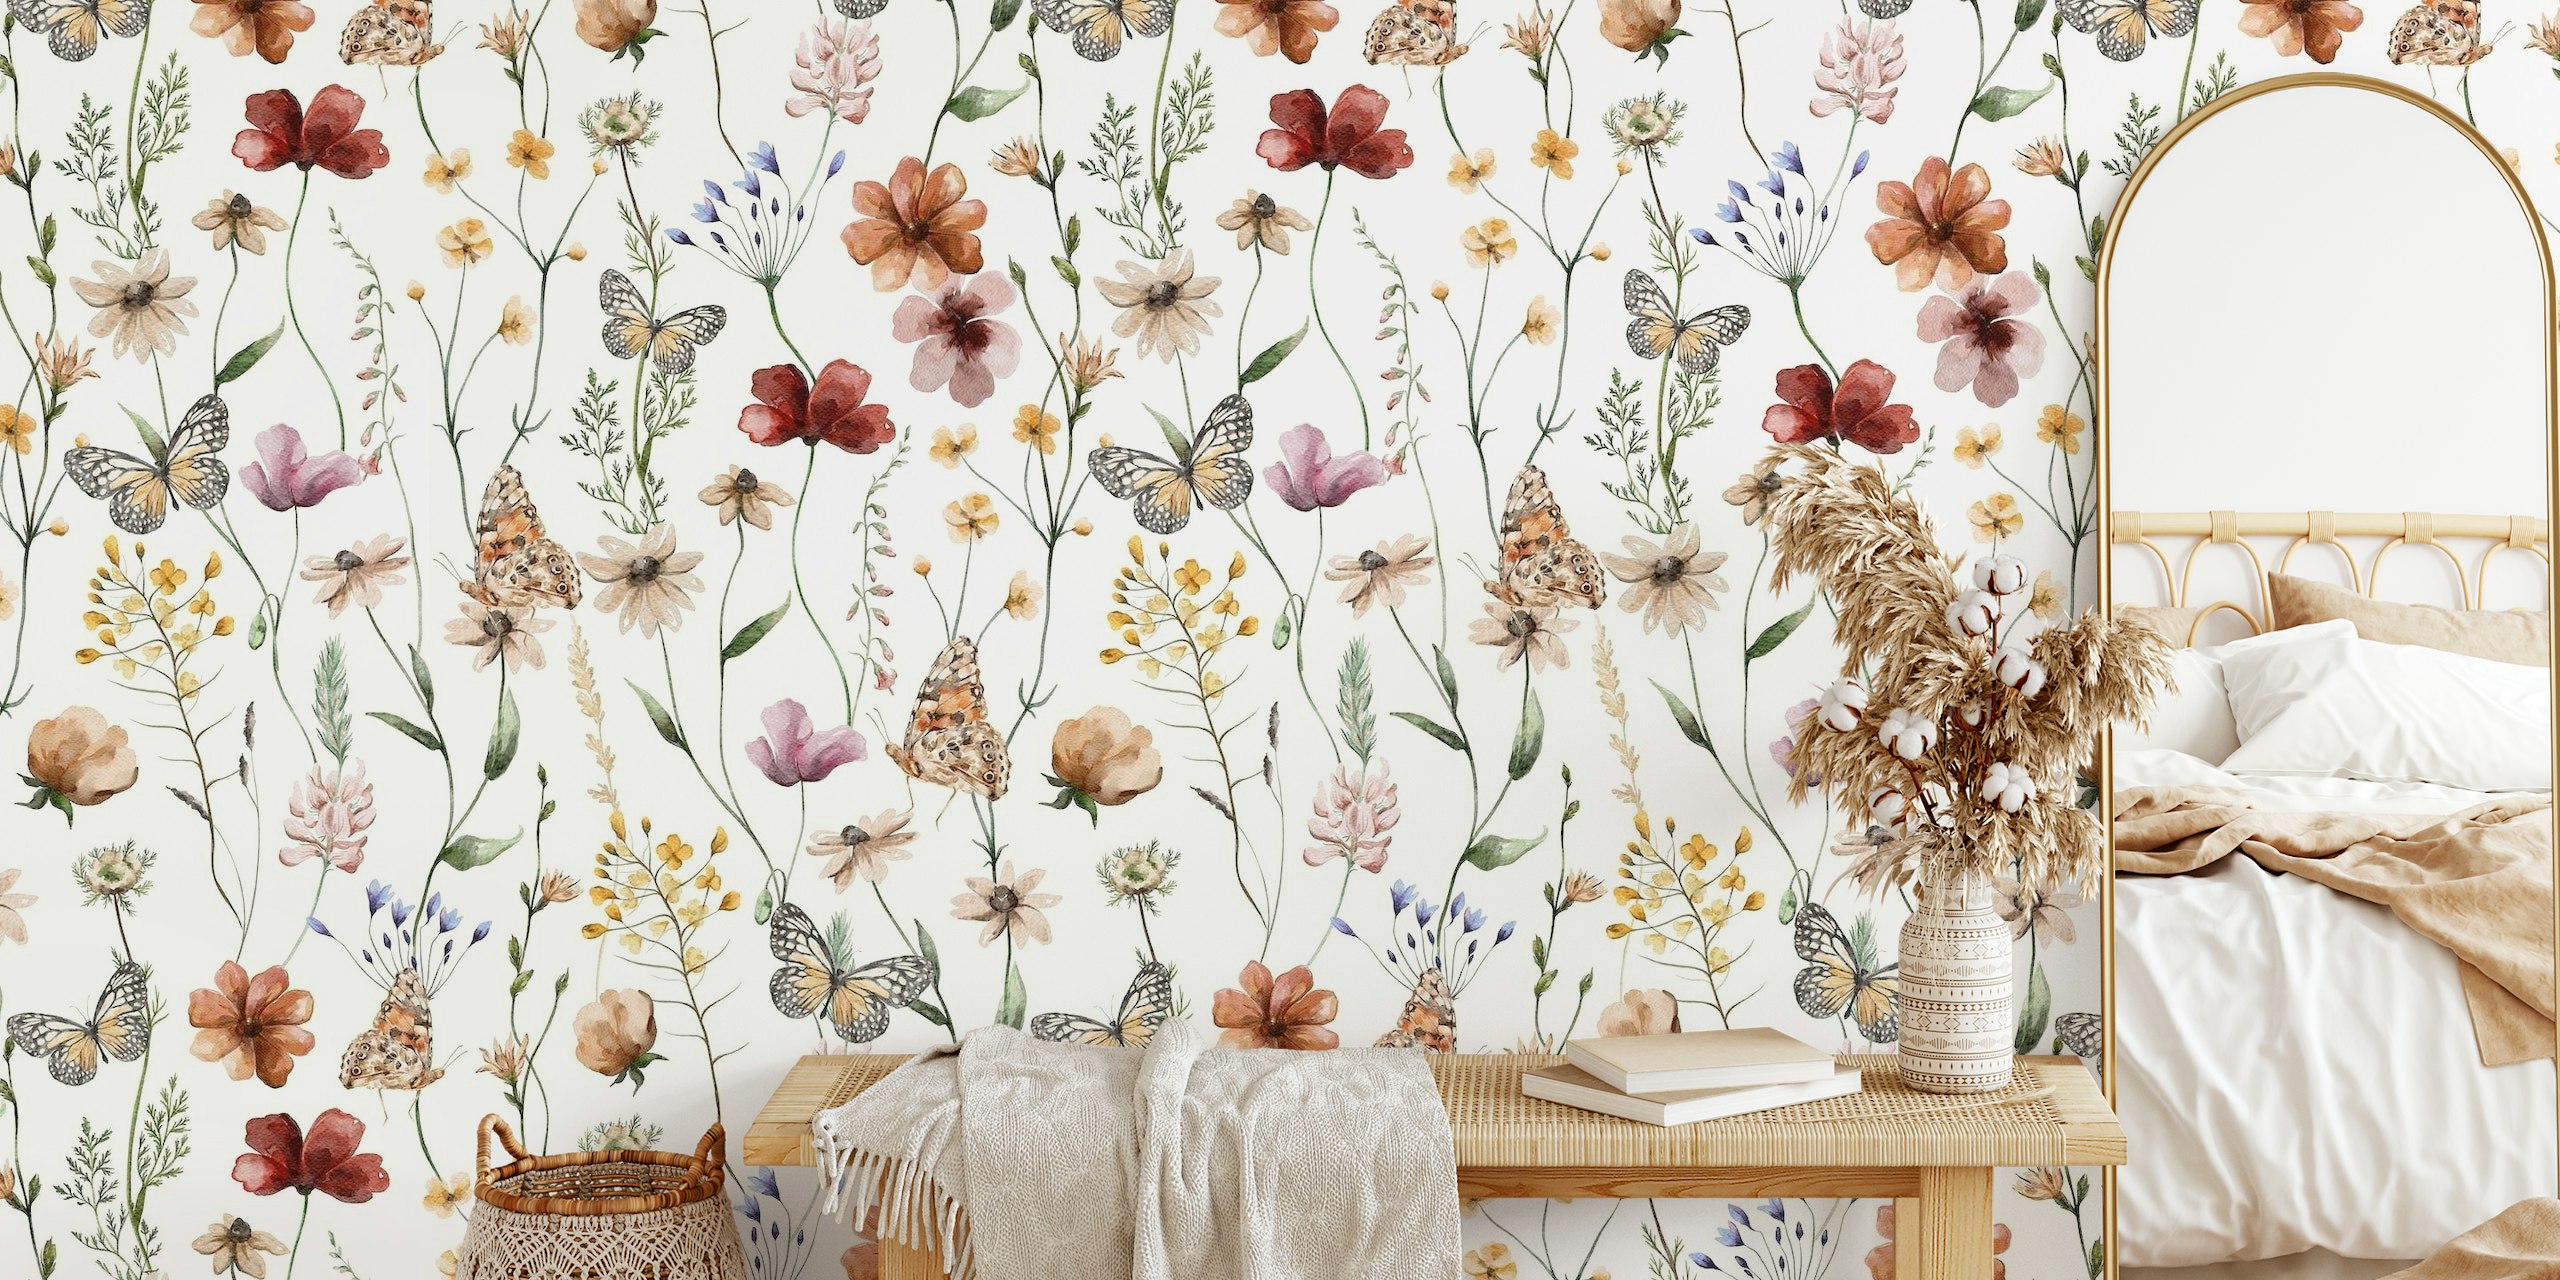 Enchanting Dried Wildflowers Meadow wallpaper